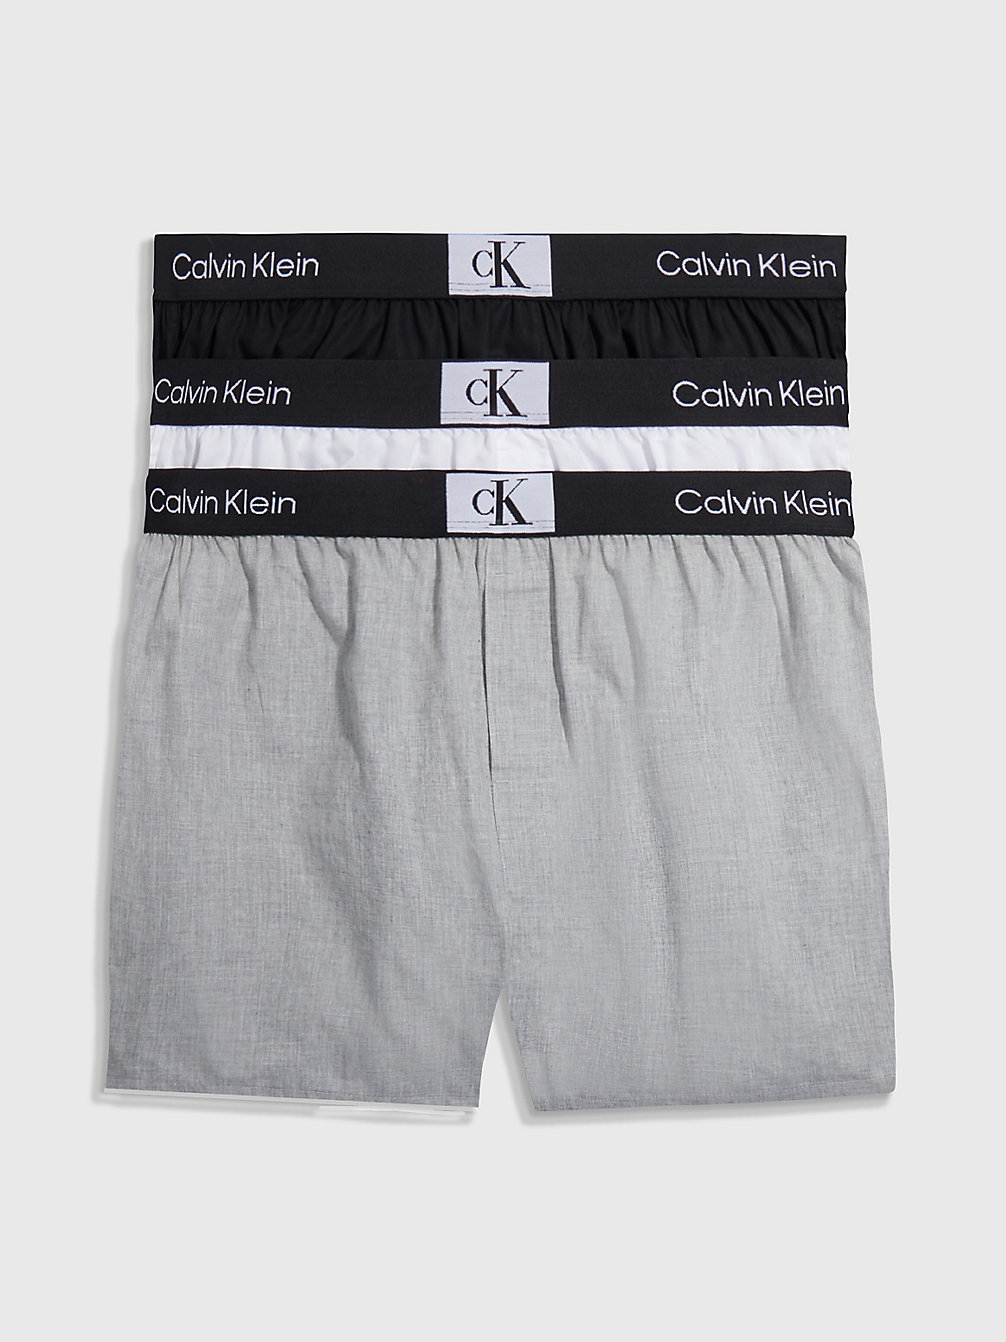 BLACK/WHITE/GREY HEATHER Lot De 3 Caleçons Slim Fit - Ck96 undefined hommes Calvin Klein